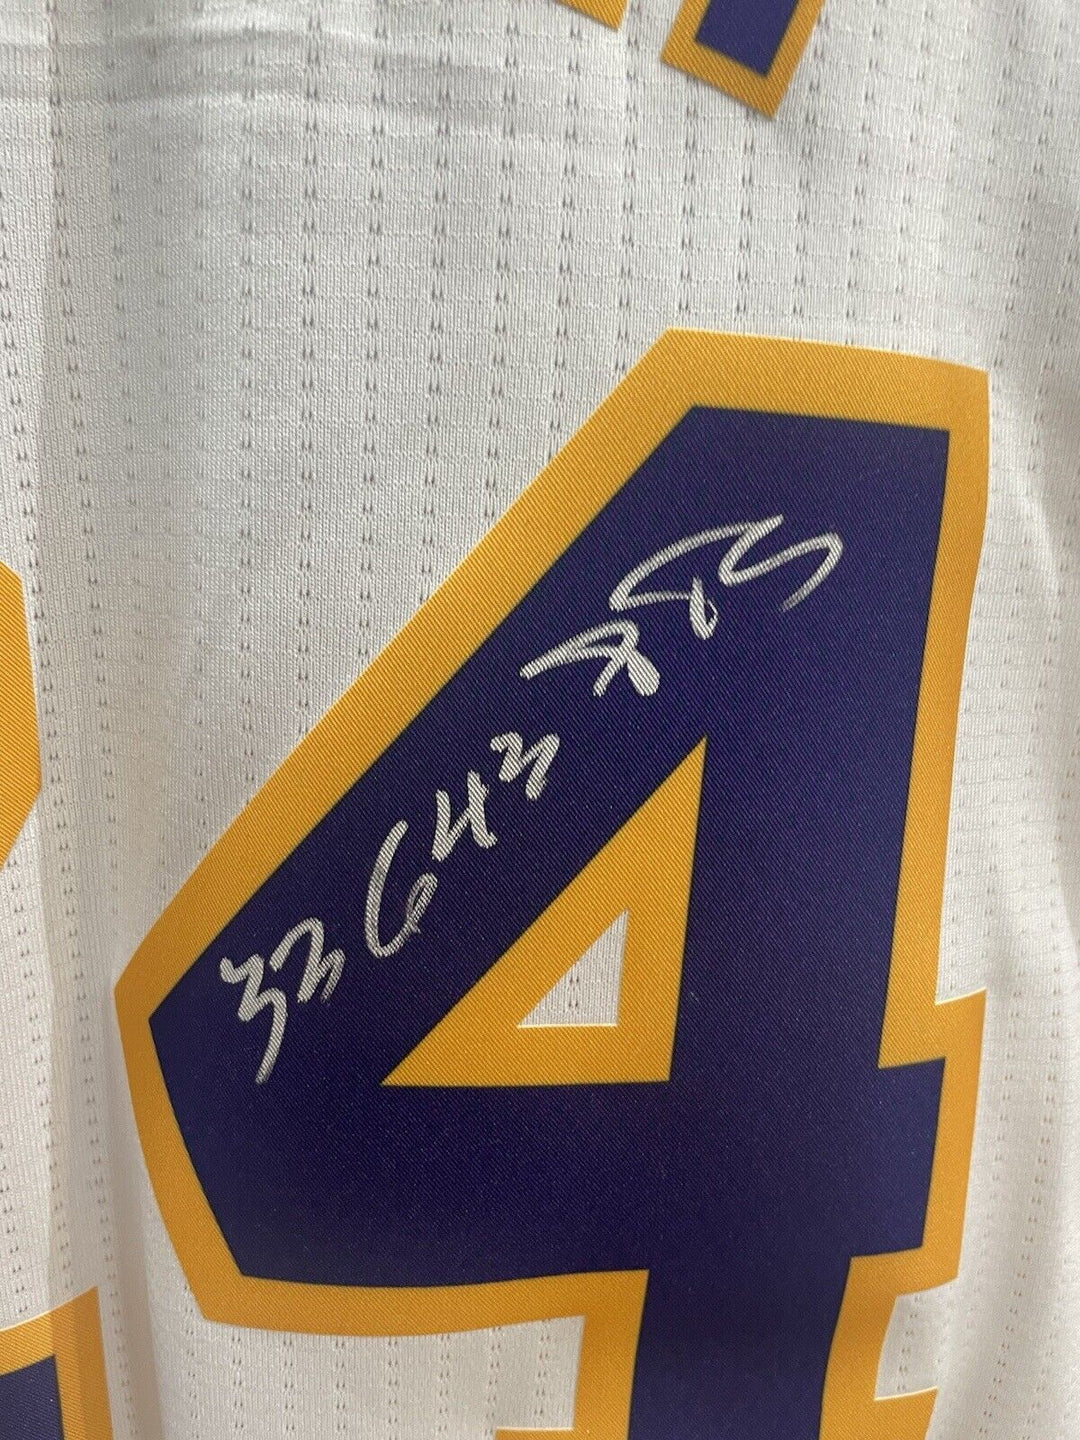 Kobe Bryant Signed Adidas Lakers Jersey Career Points Auto LE /124 Panini Coa Image 4